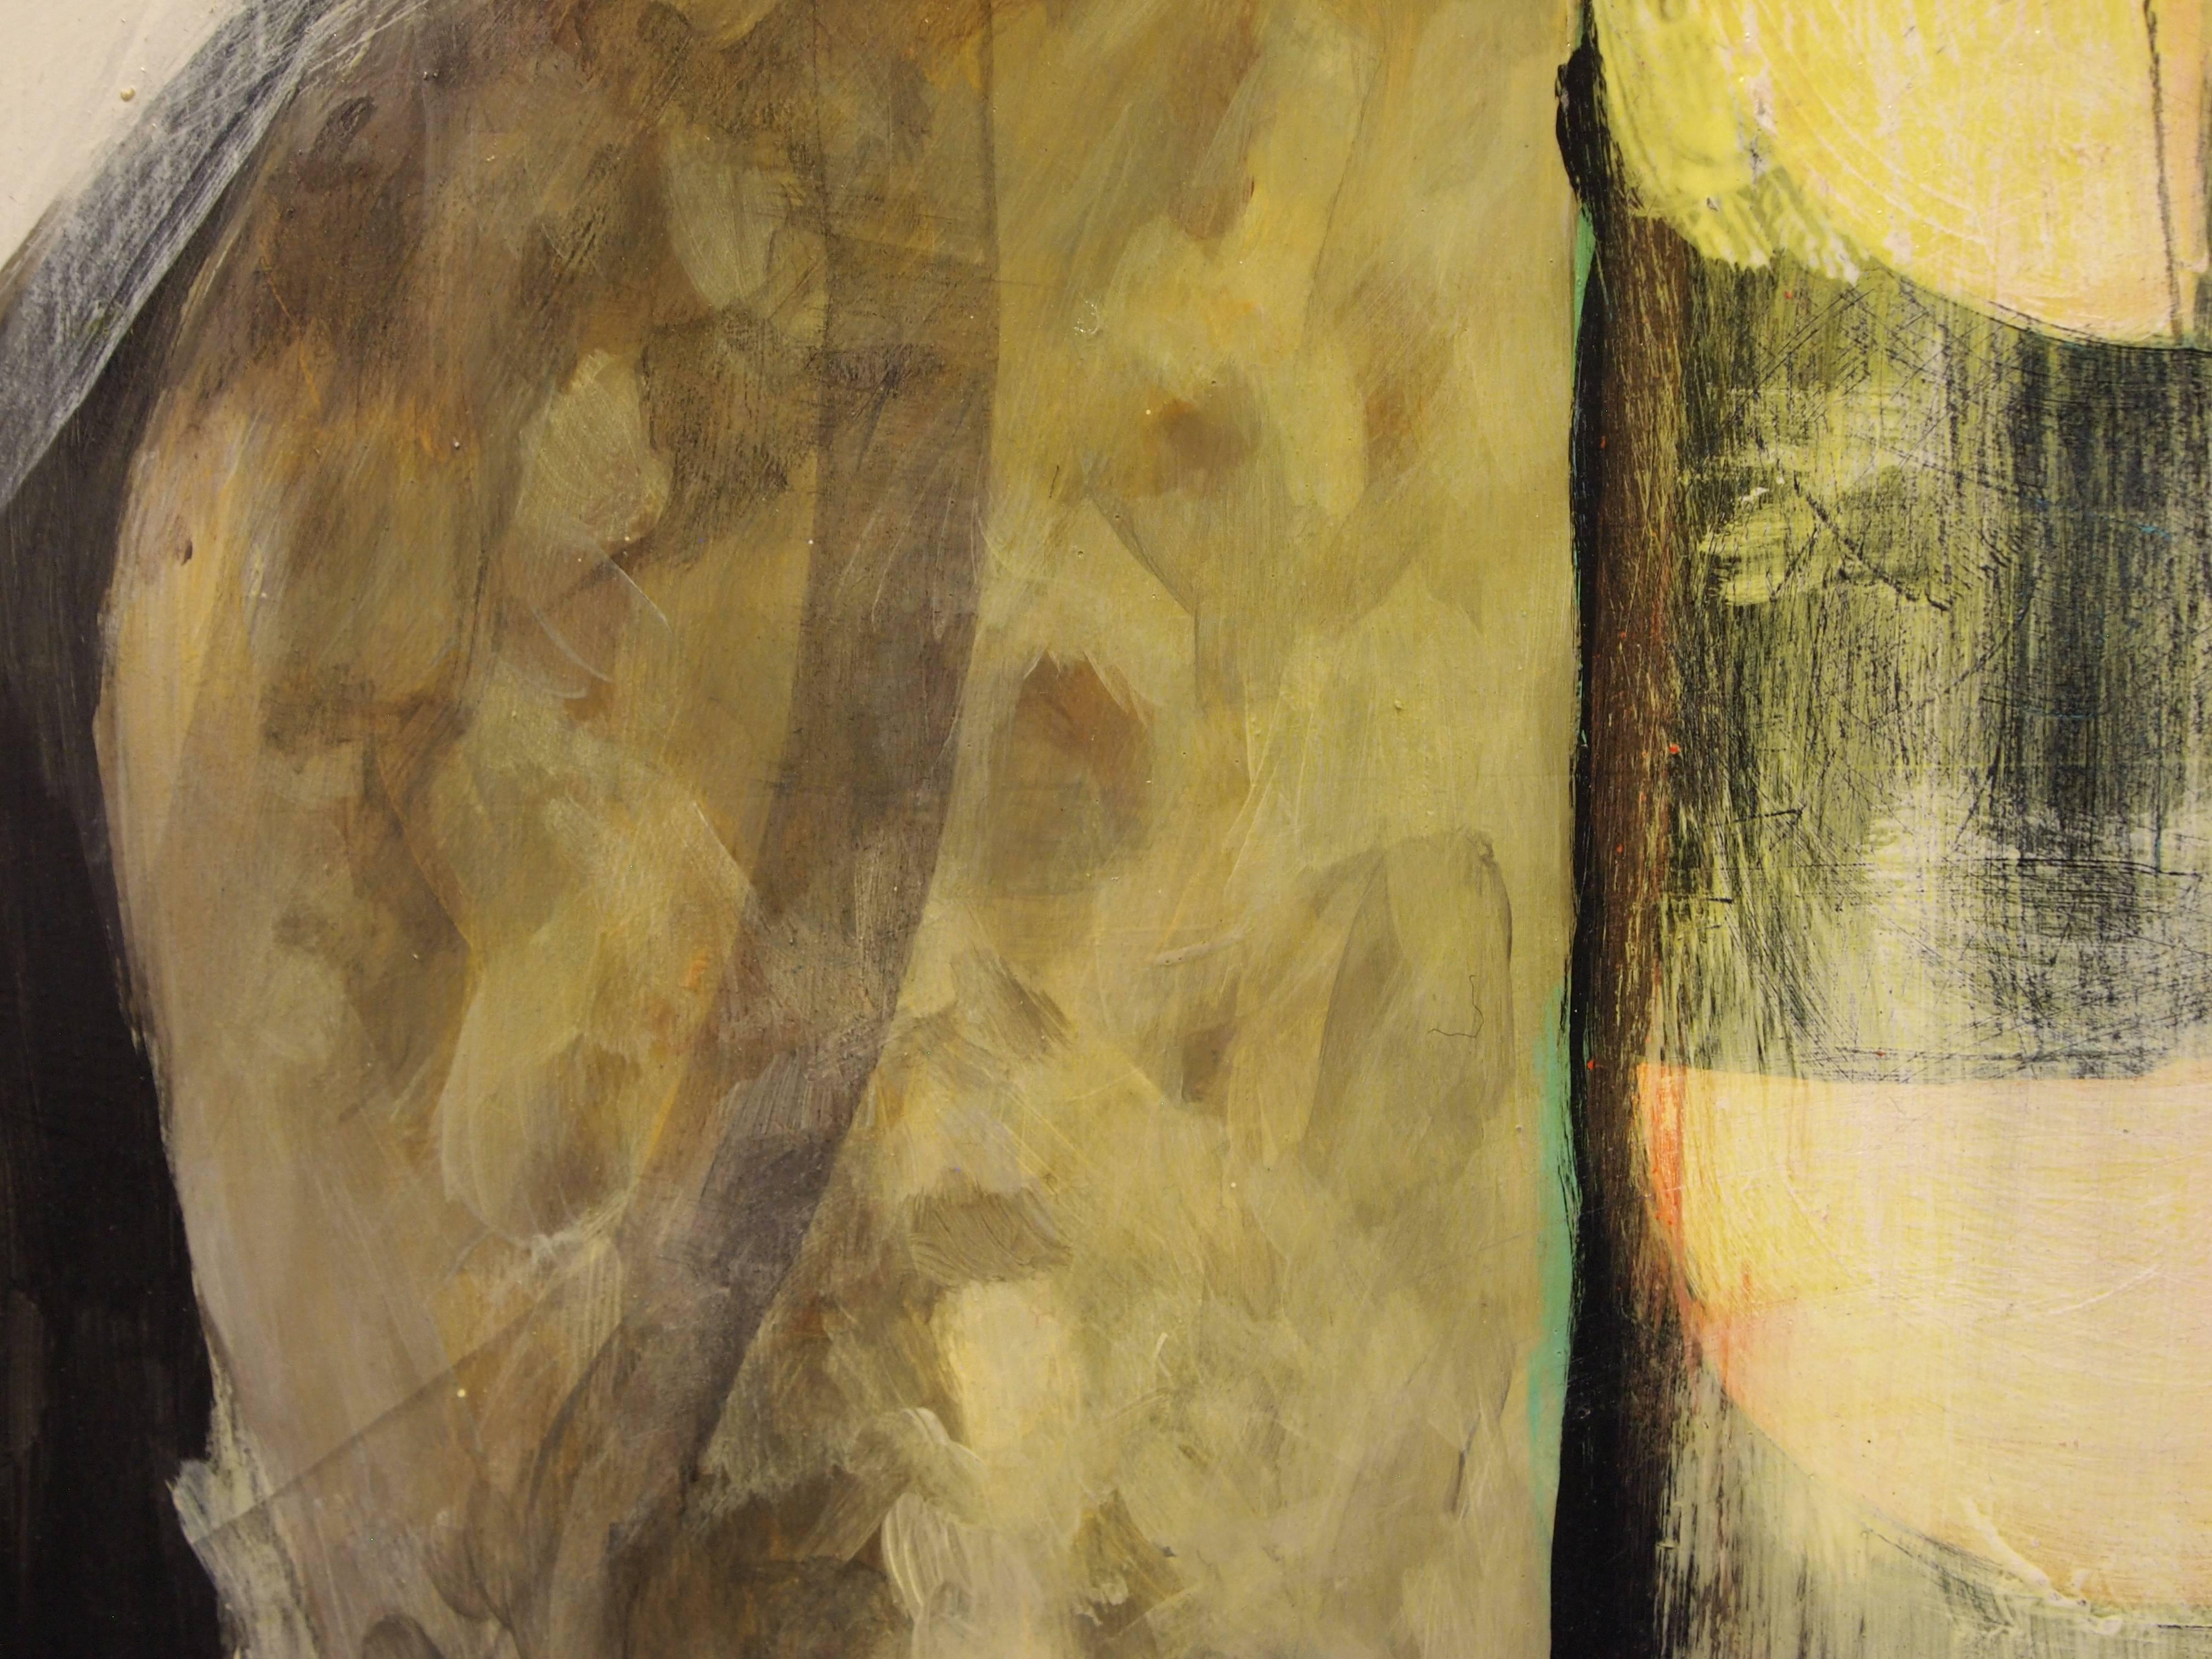 Spencer Herr
Bestowed, 2016
Acrylic on Panel
40 x 48 in. (101.6 x 121.92 cm)